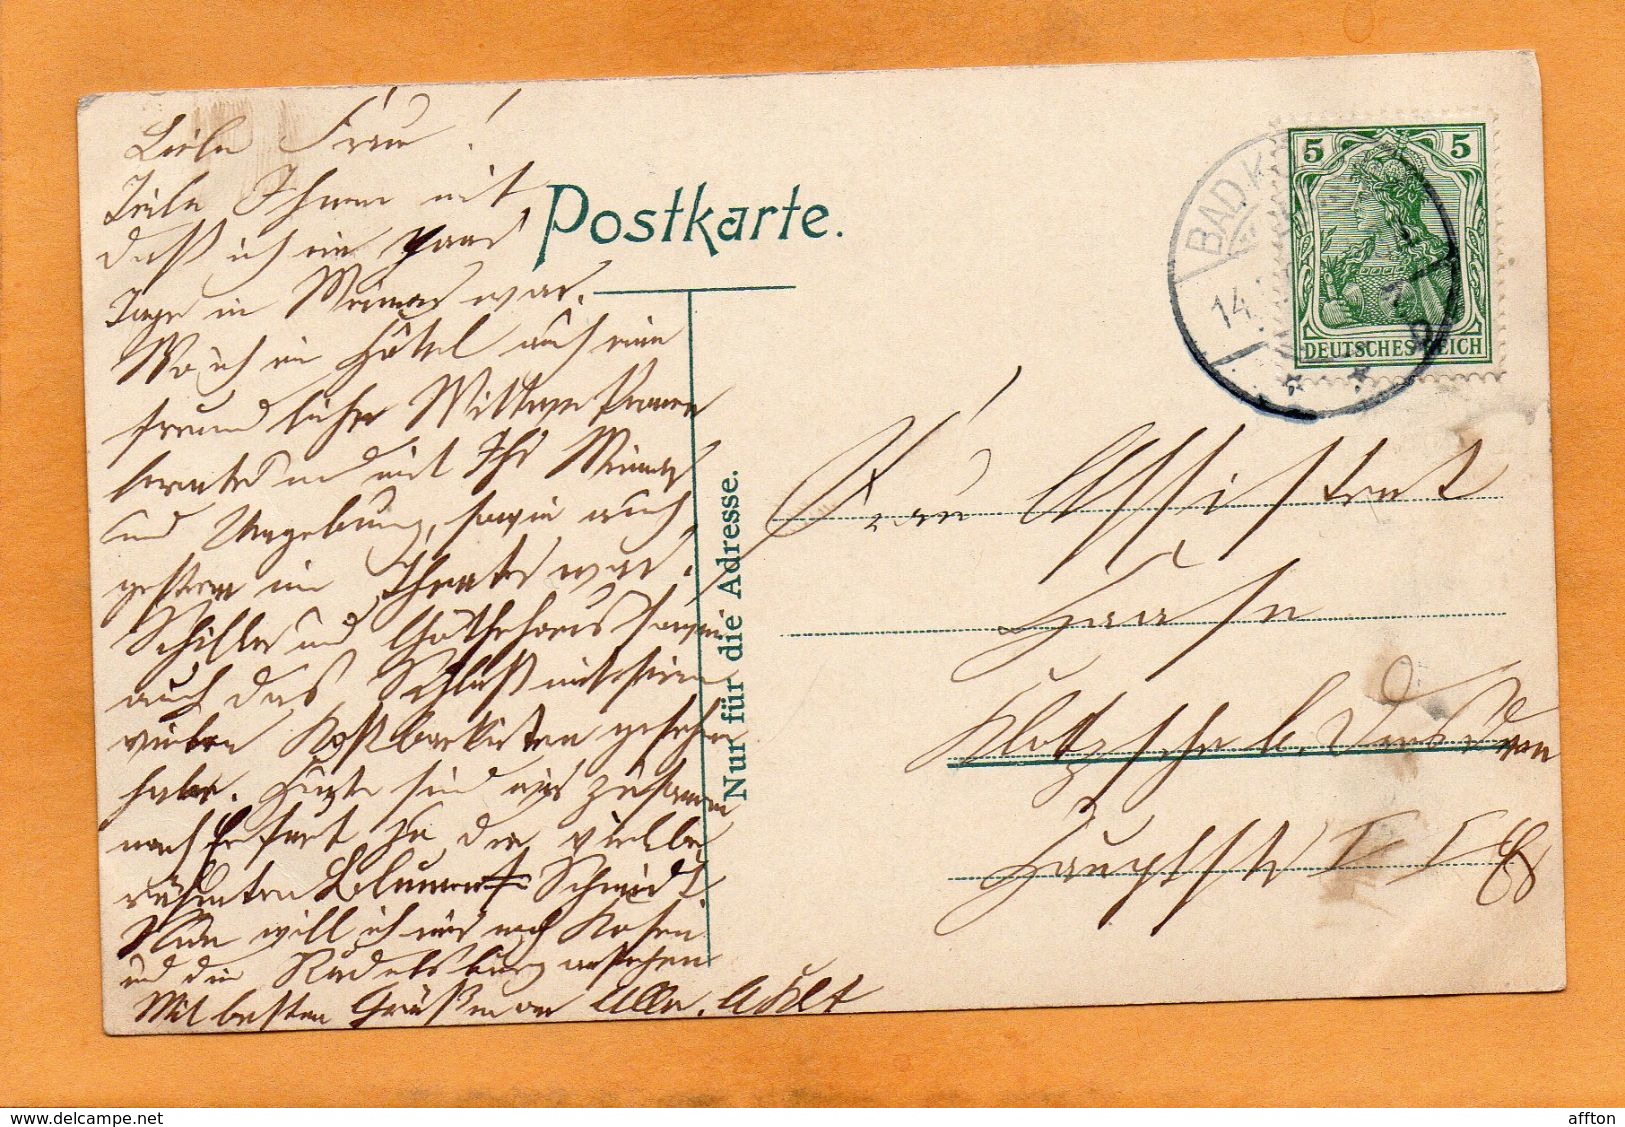 Bad Kosen Germany 1905 Postcard Mailed - Bad Koesen